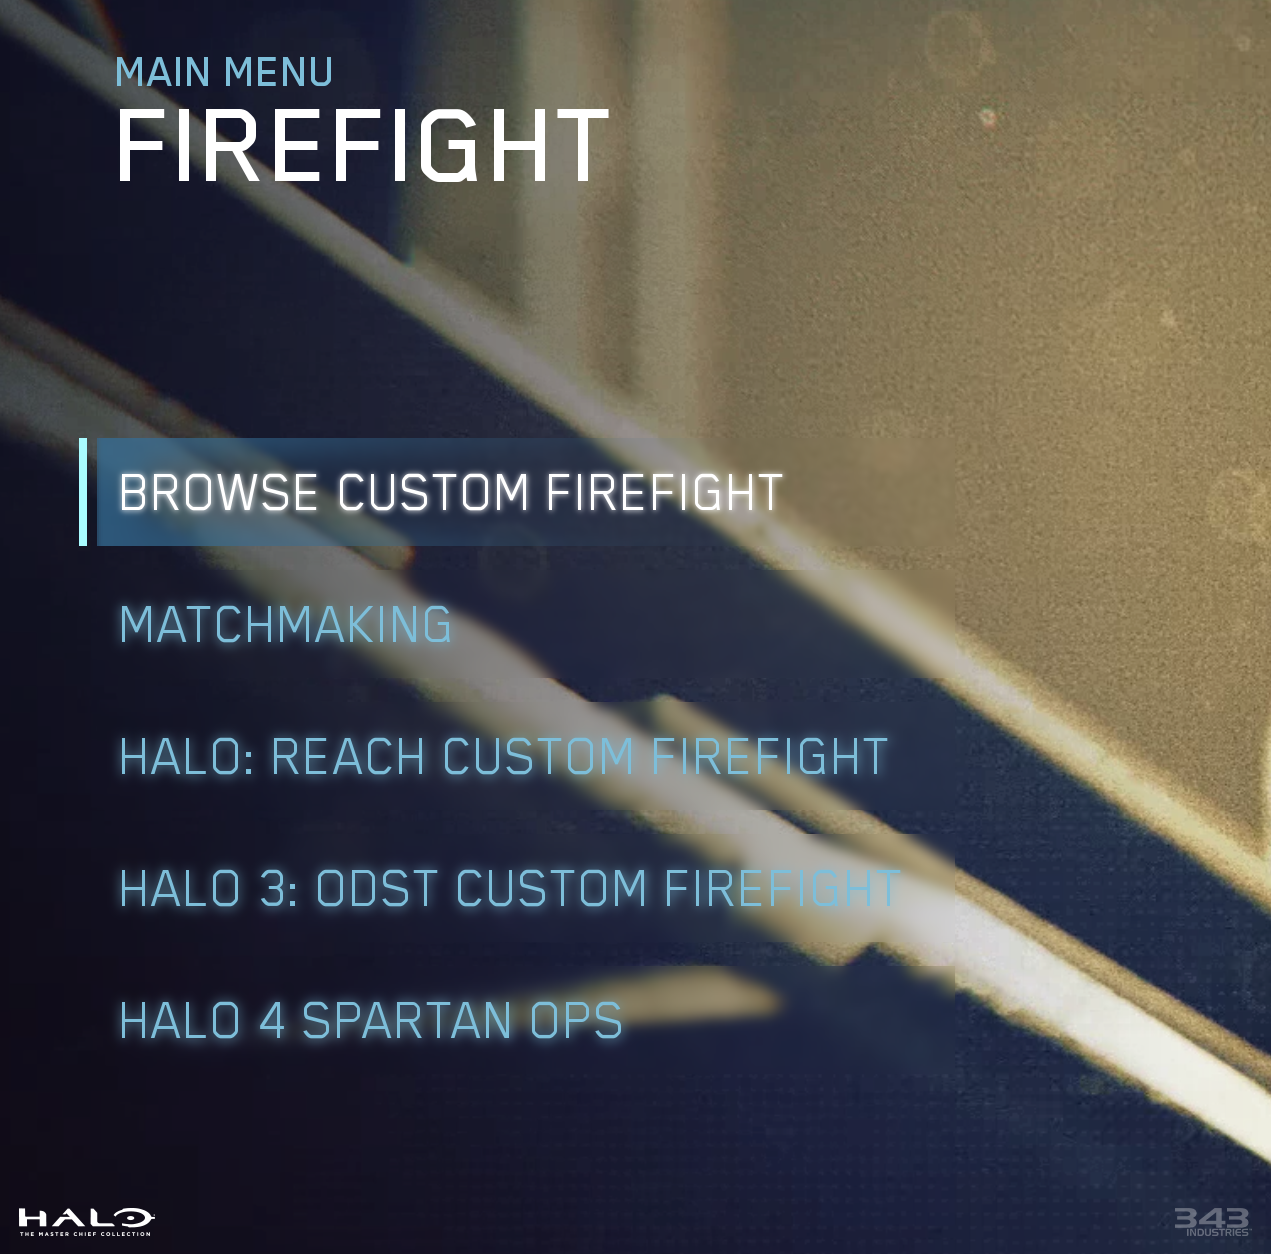 MCC menu screenshot showing "Browse Custom Firefight" option